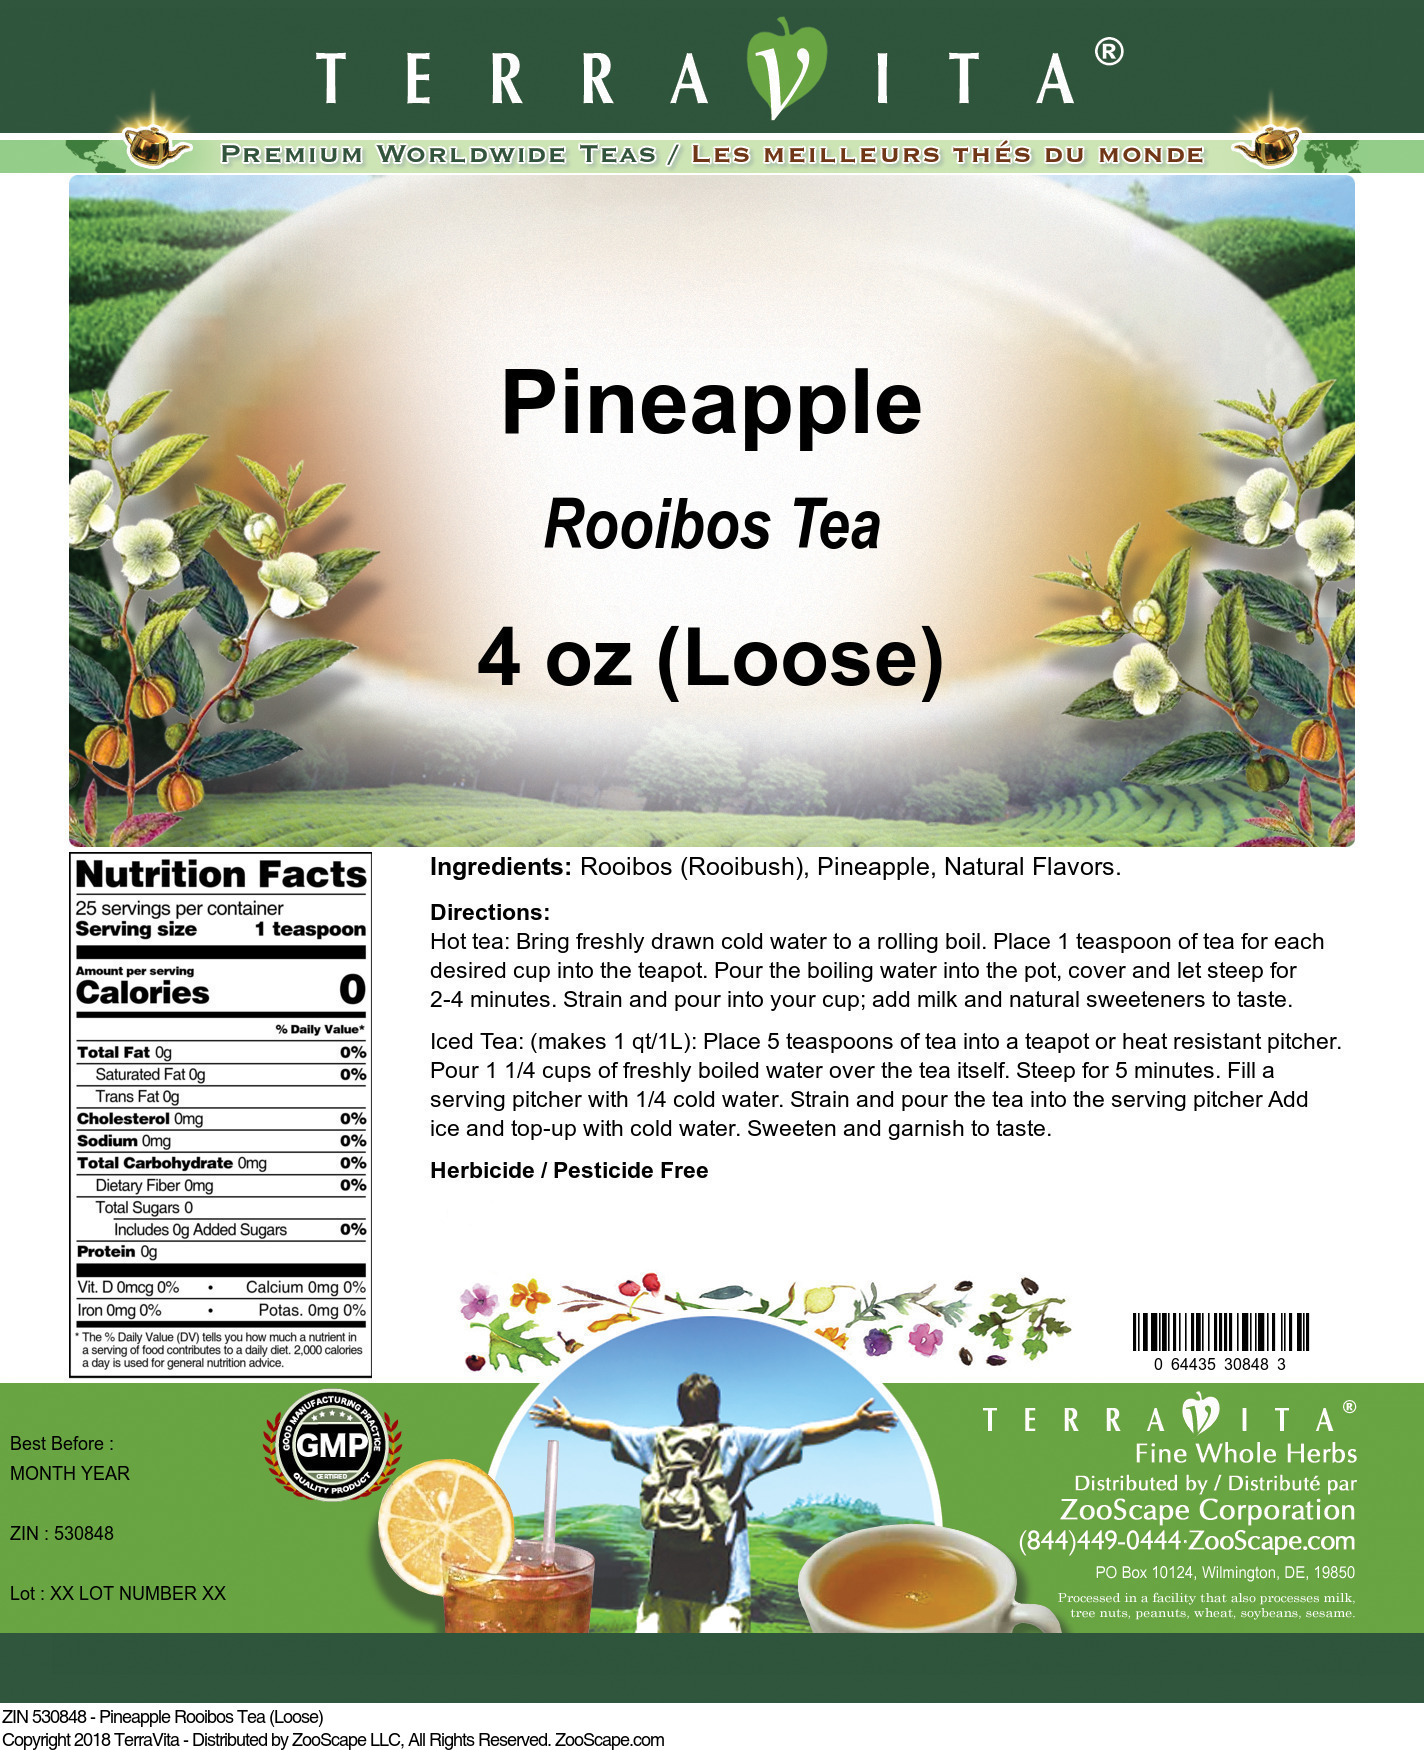 Pineapple Rooibos Tea (Loose) - Label